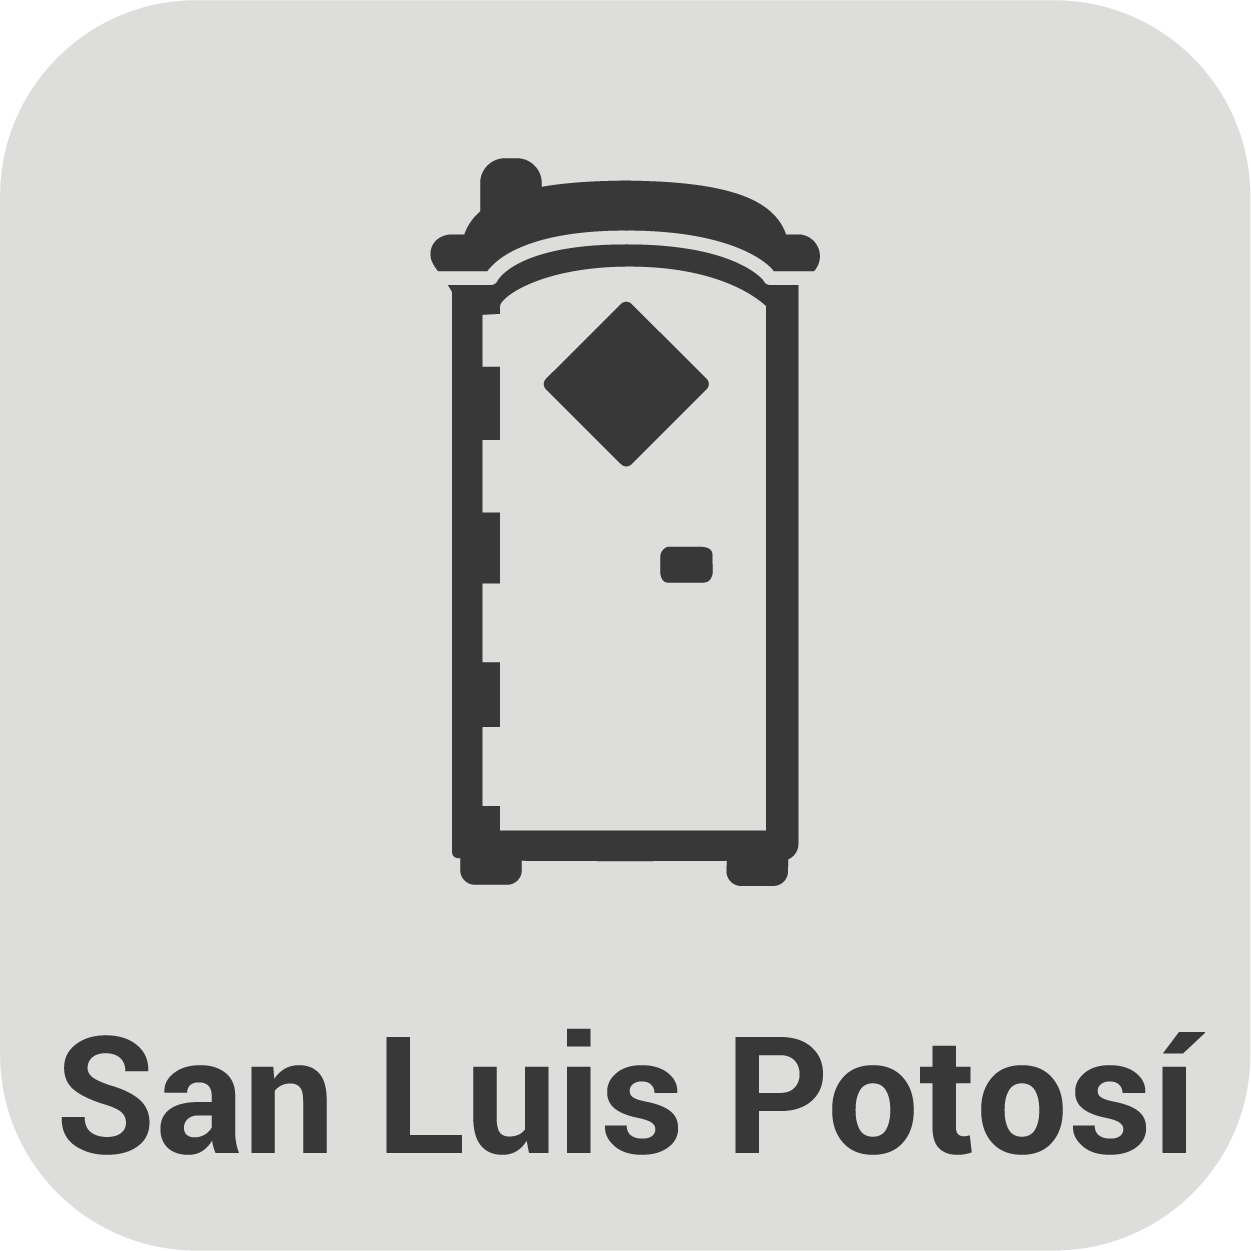 San Luis Potosí